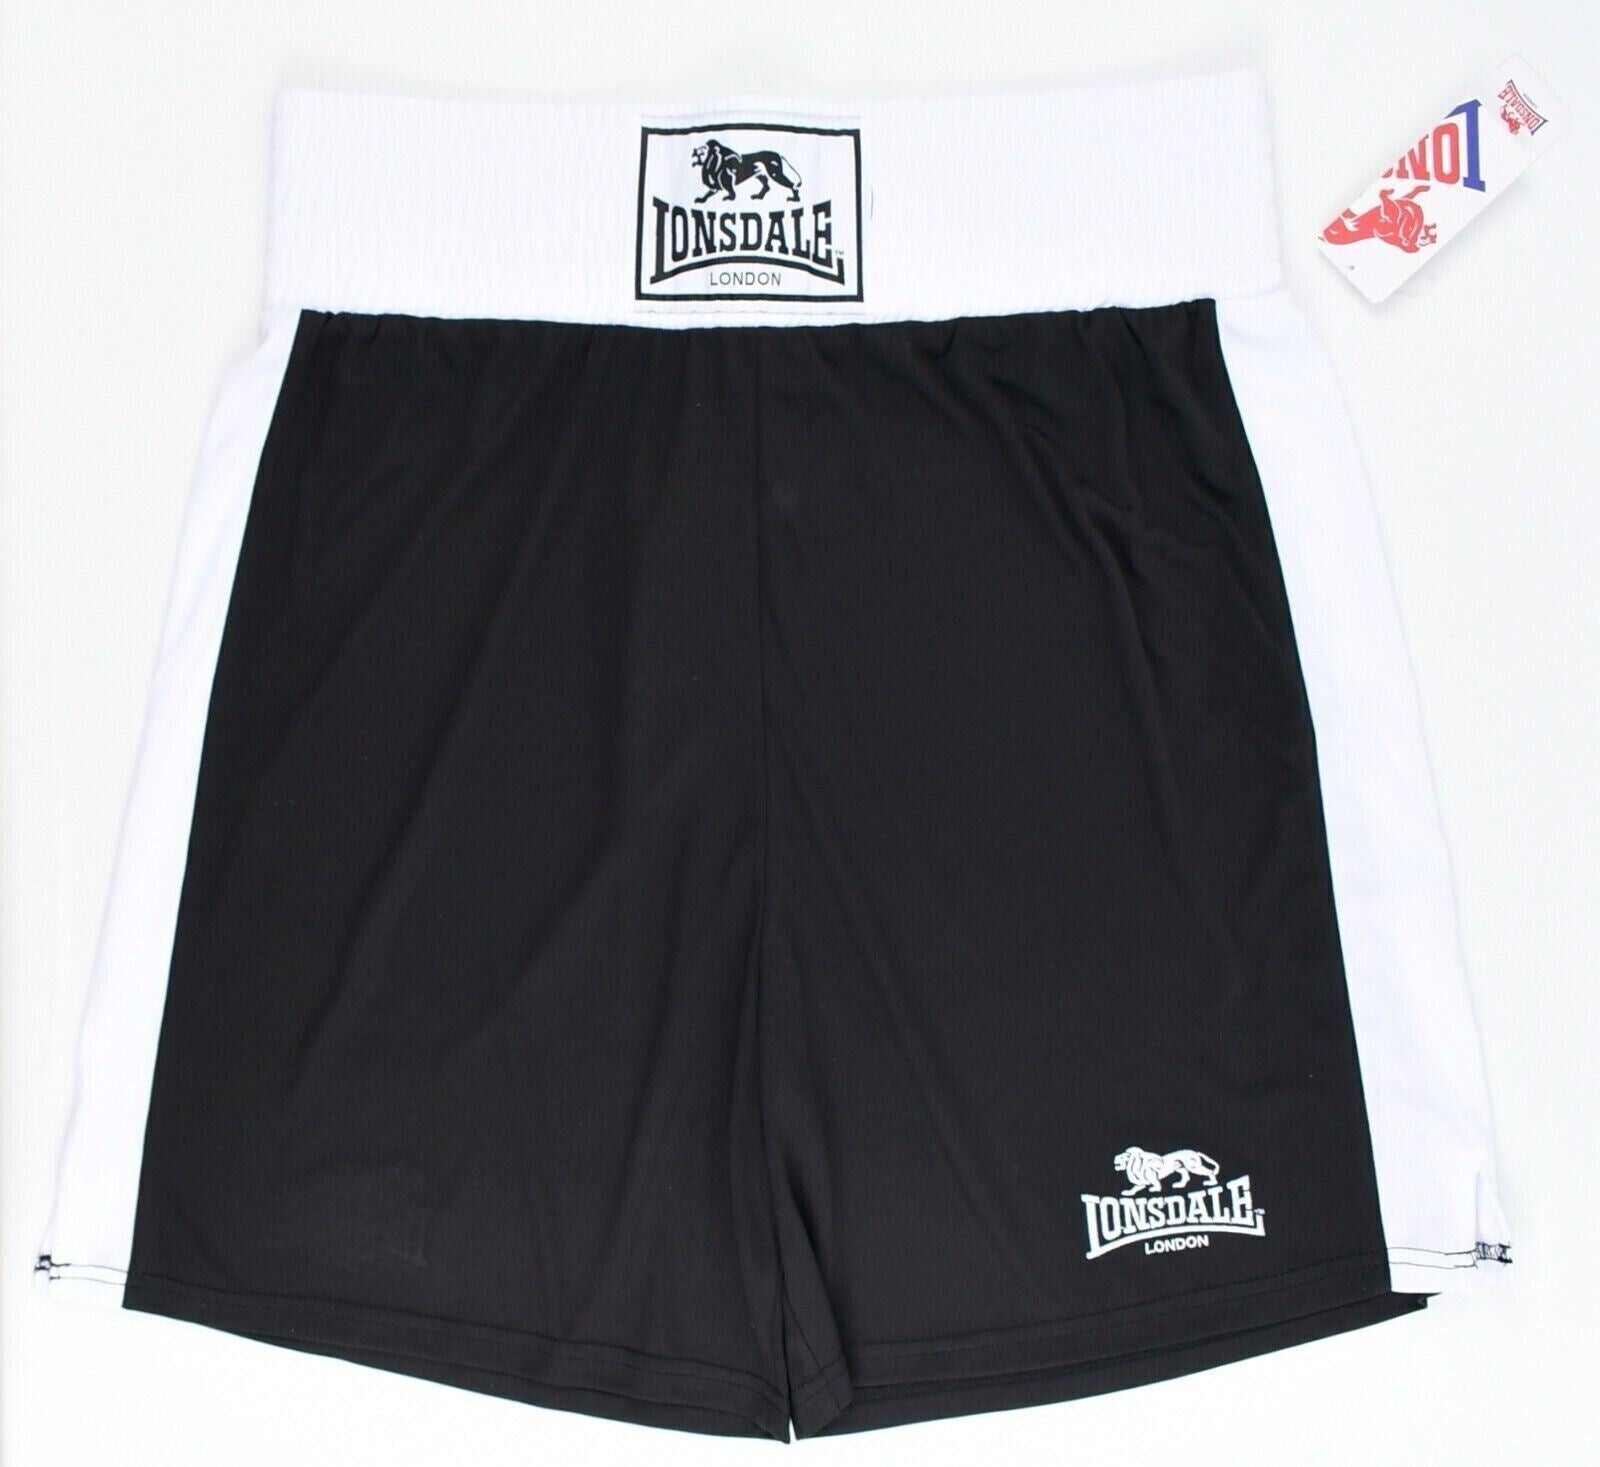 LONSDALE Men's Performance Boxing Shorts, Black/White, size XL